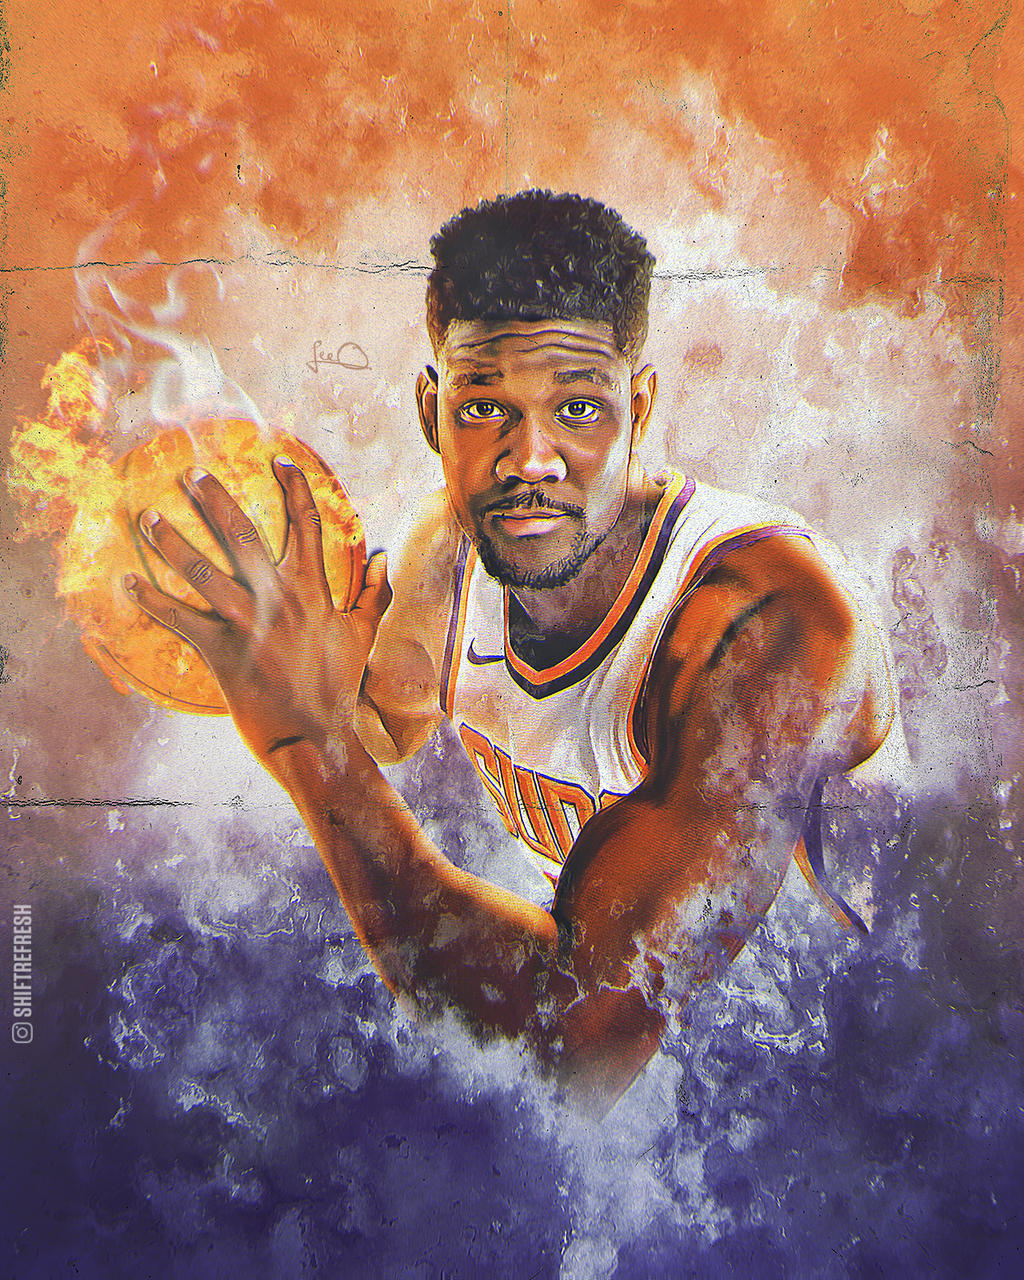 Download NBA Phoenix Suns Deandre Ayton Digital Artwork Wallpaper